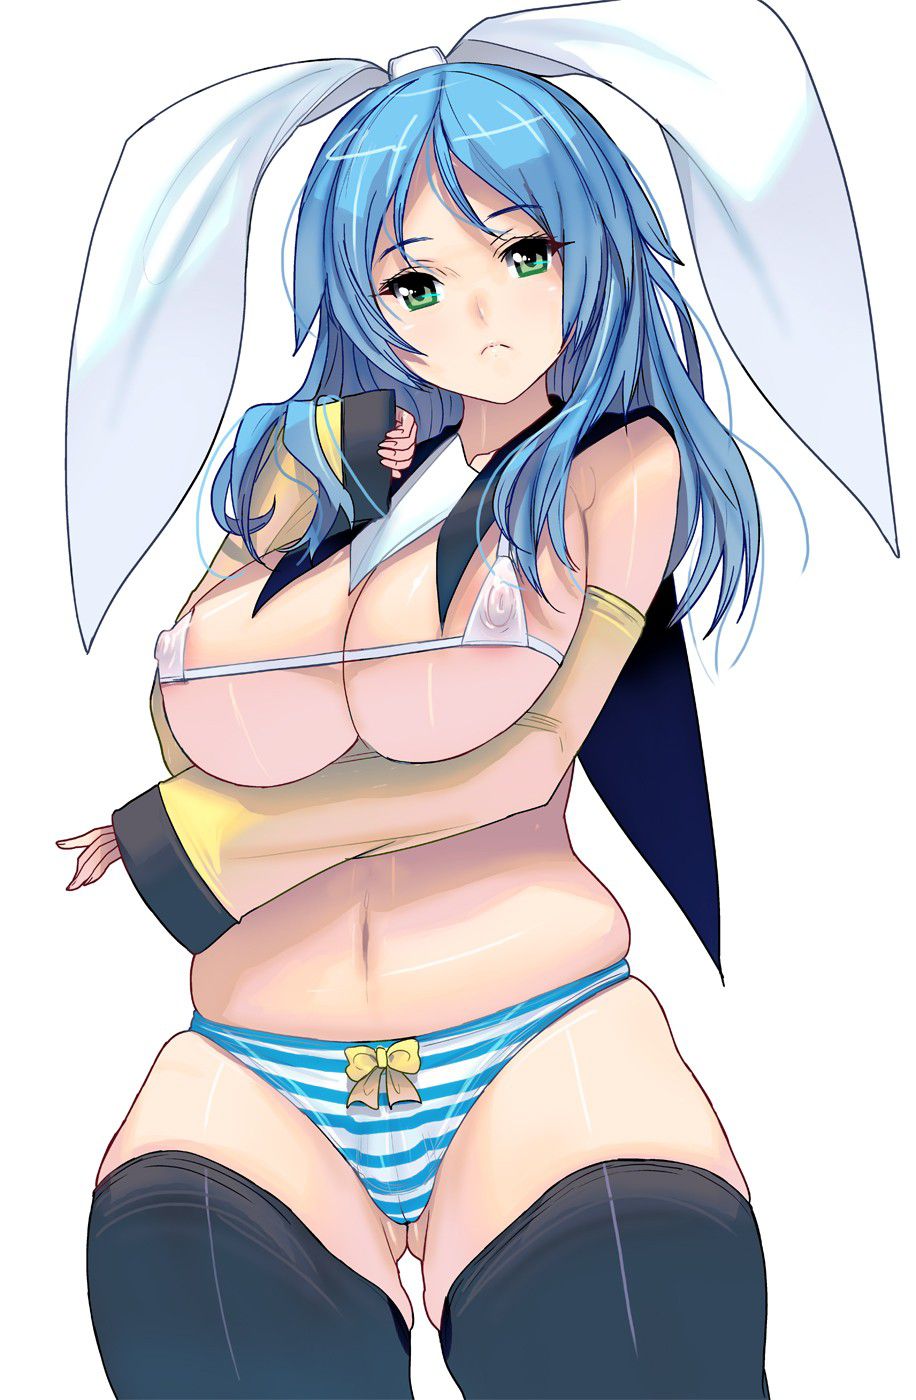 Secondary erotic images of girls wearing erotic underwear and costume 13 [Naughty Shitagi] 15